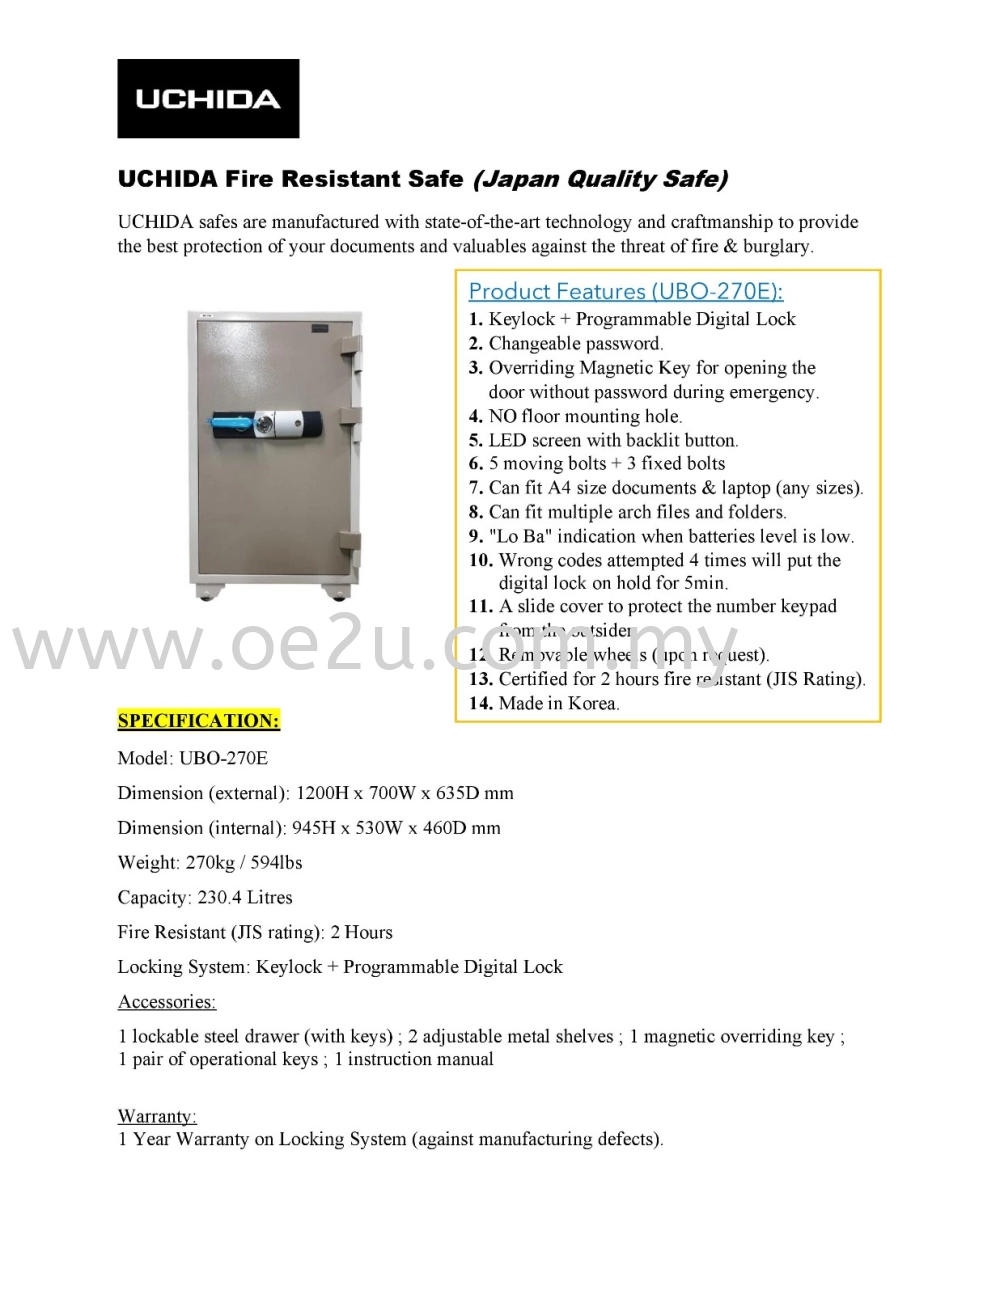 UCHIDA UBO-270E Fire Resistant Safe Box (Digital Lock)_270kg